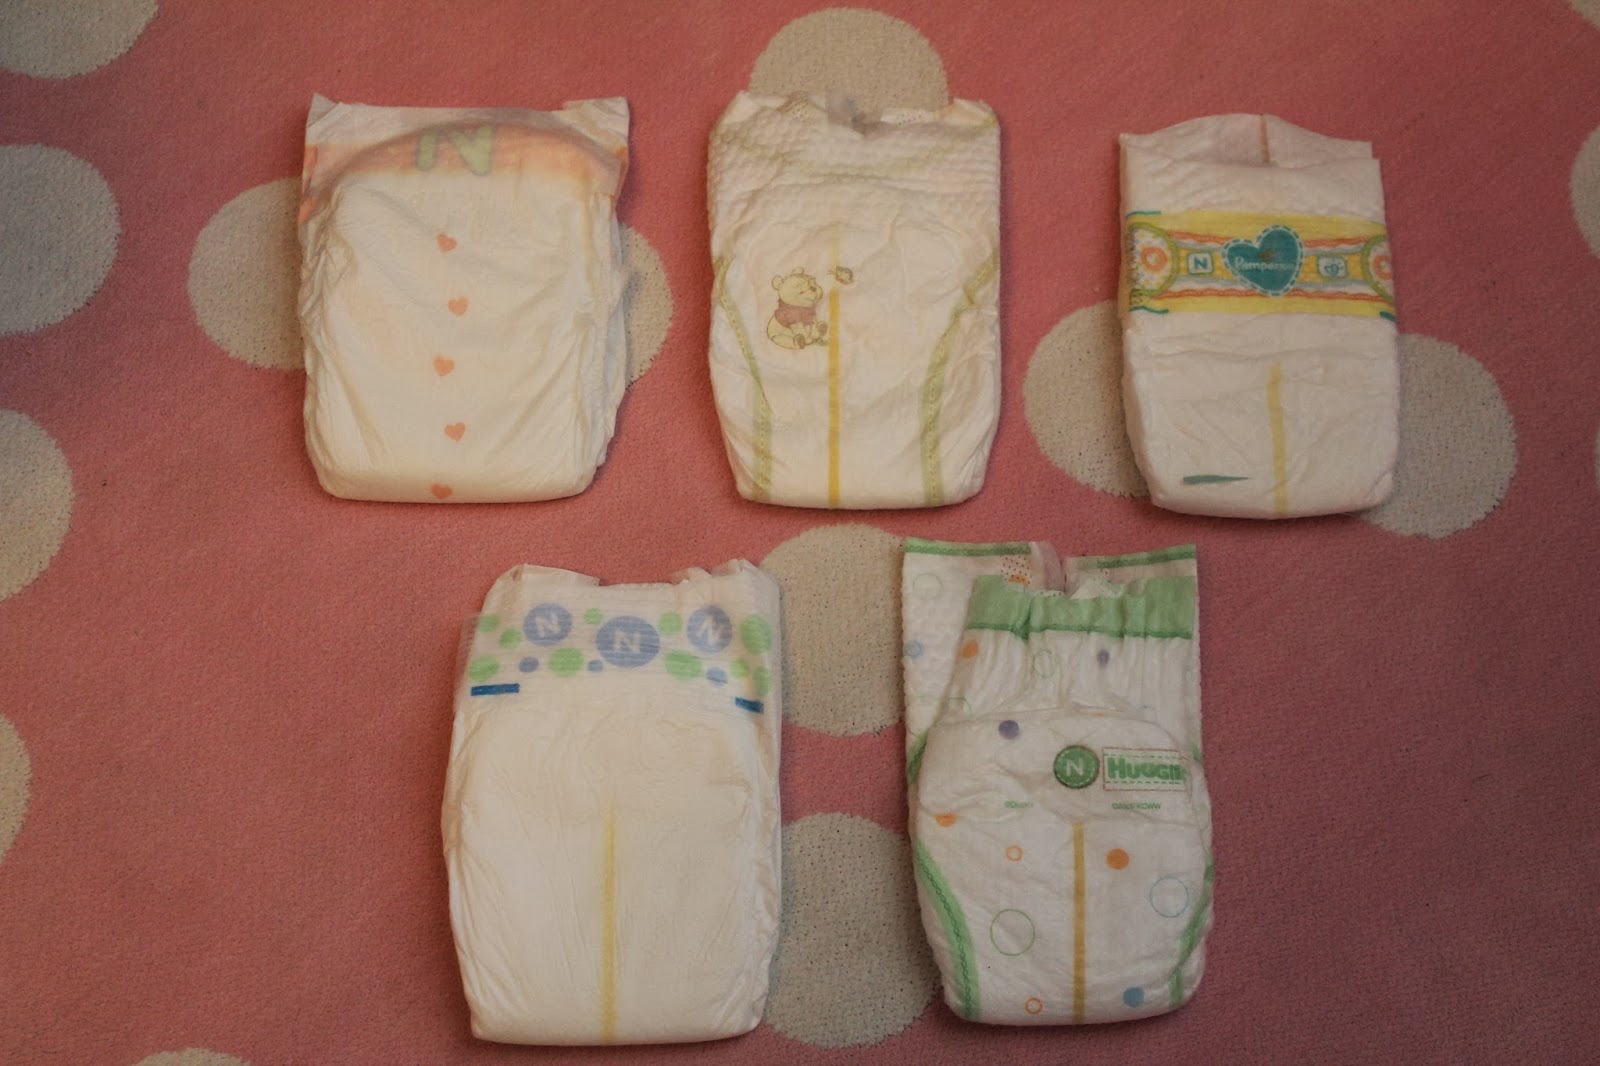 pampers newborn diapers target